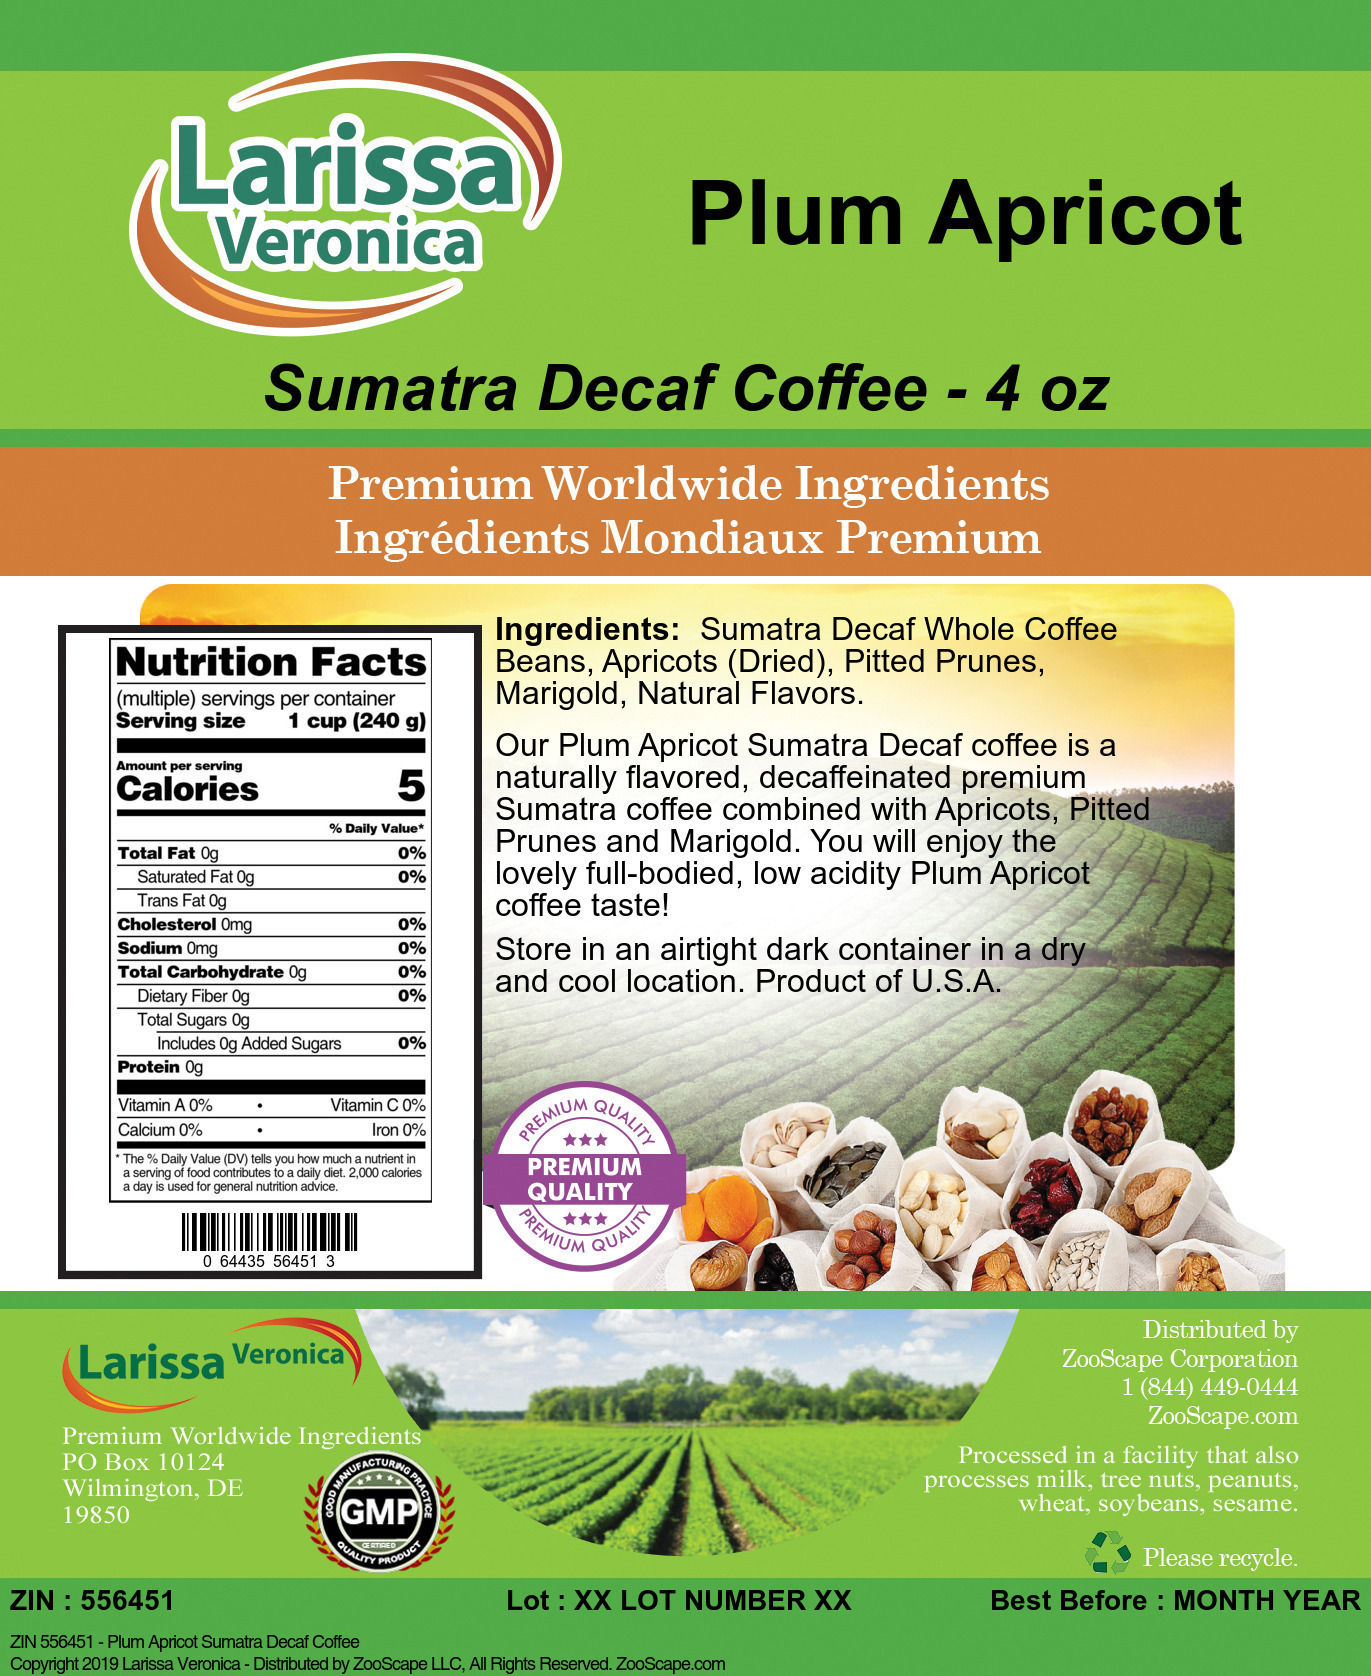 Plum Apricot Sumatra Decaf Coffee - Label